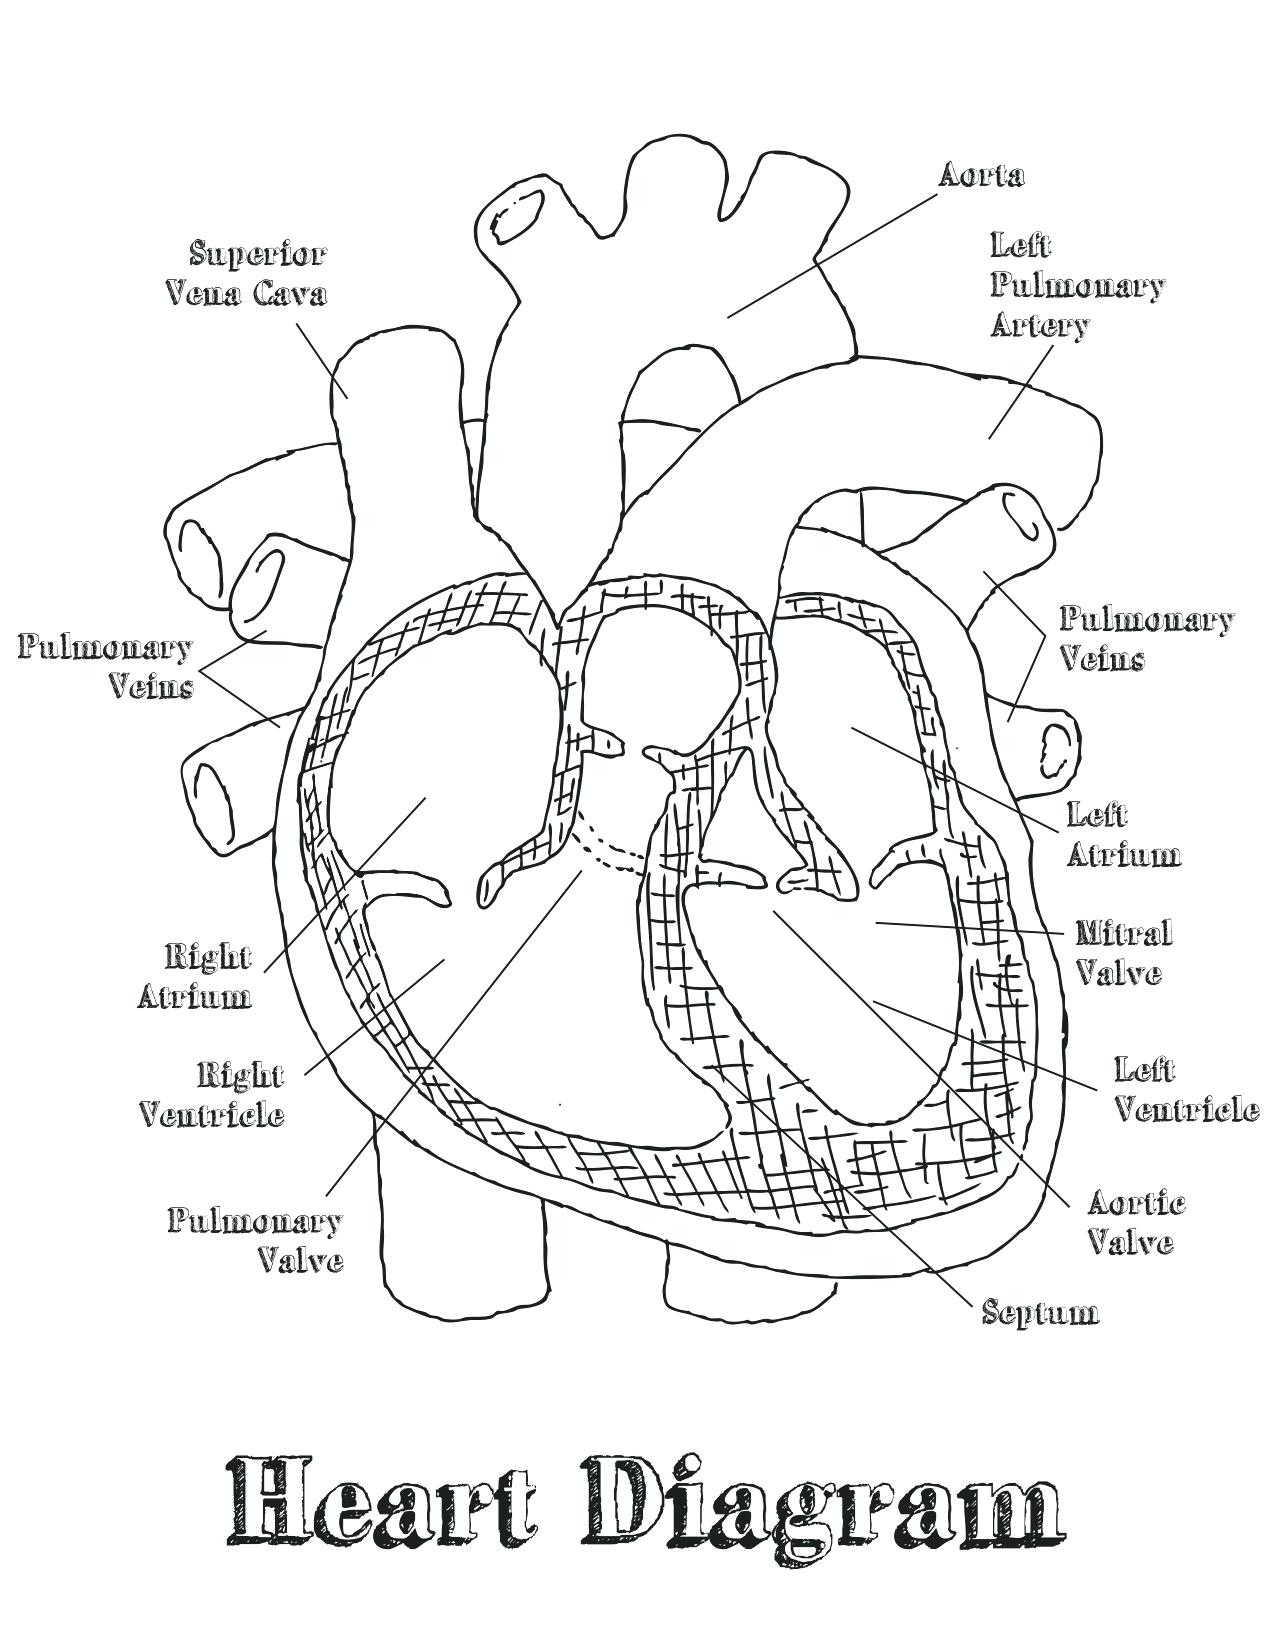 Heart Diagram Quiz Heart Diagram Answers Wiring Diagram